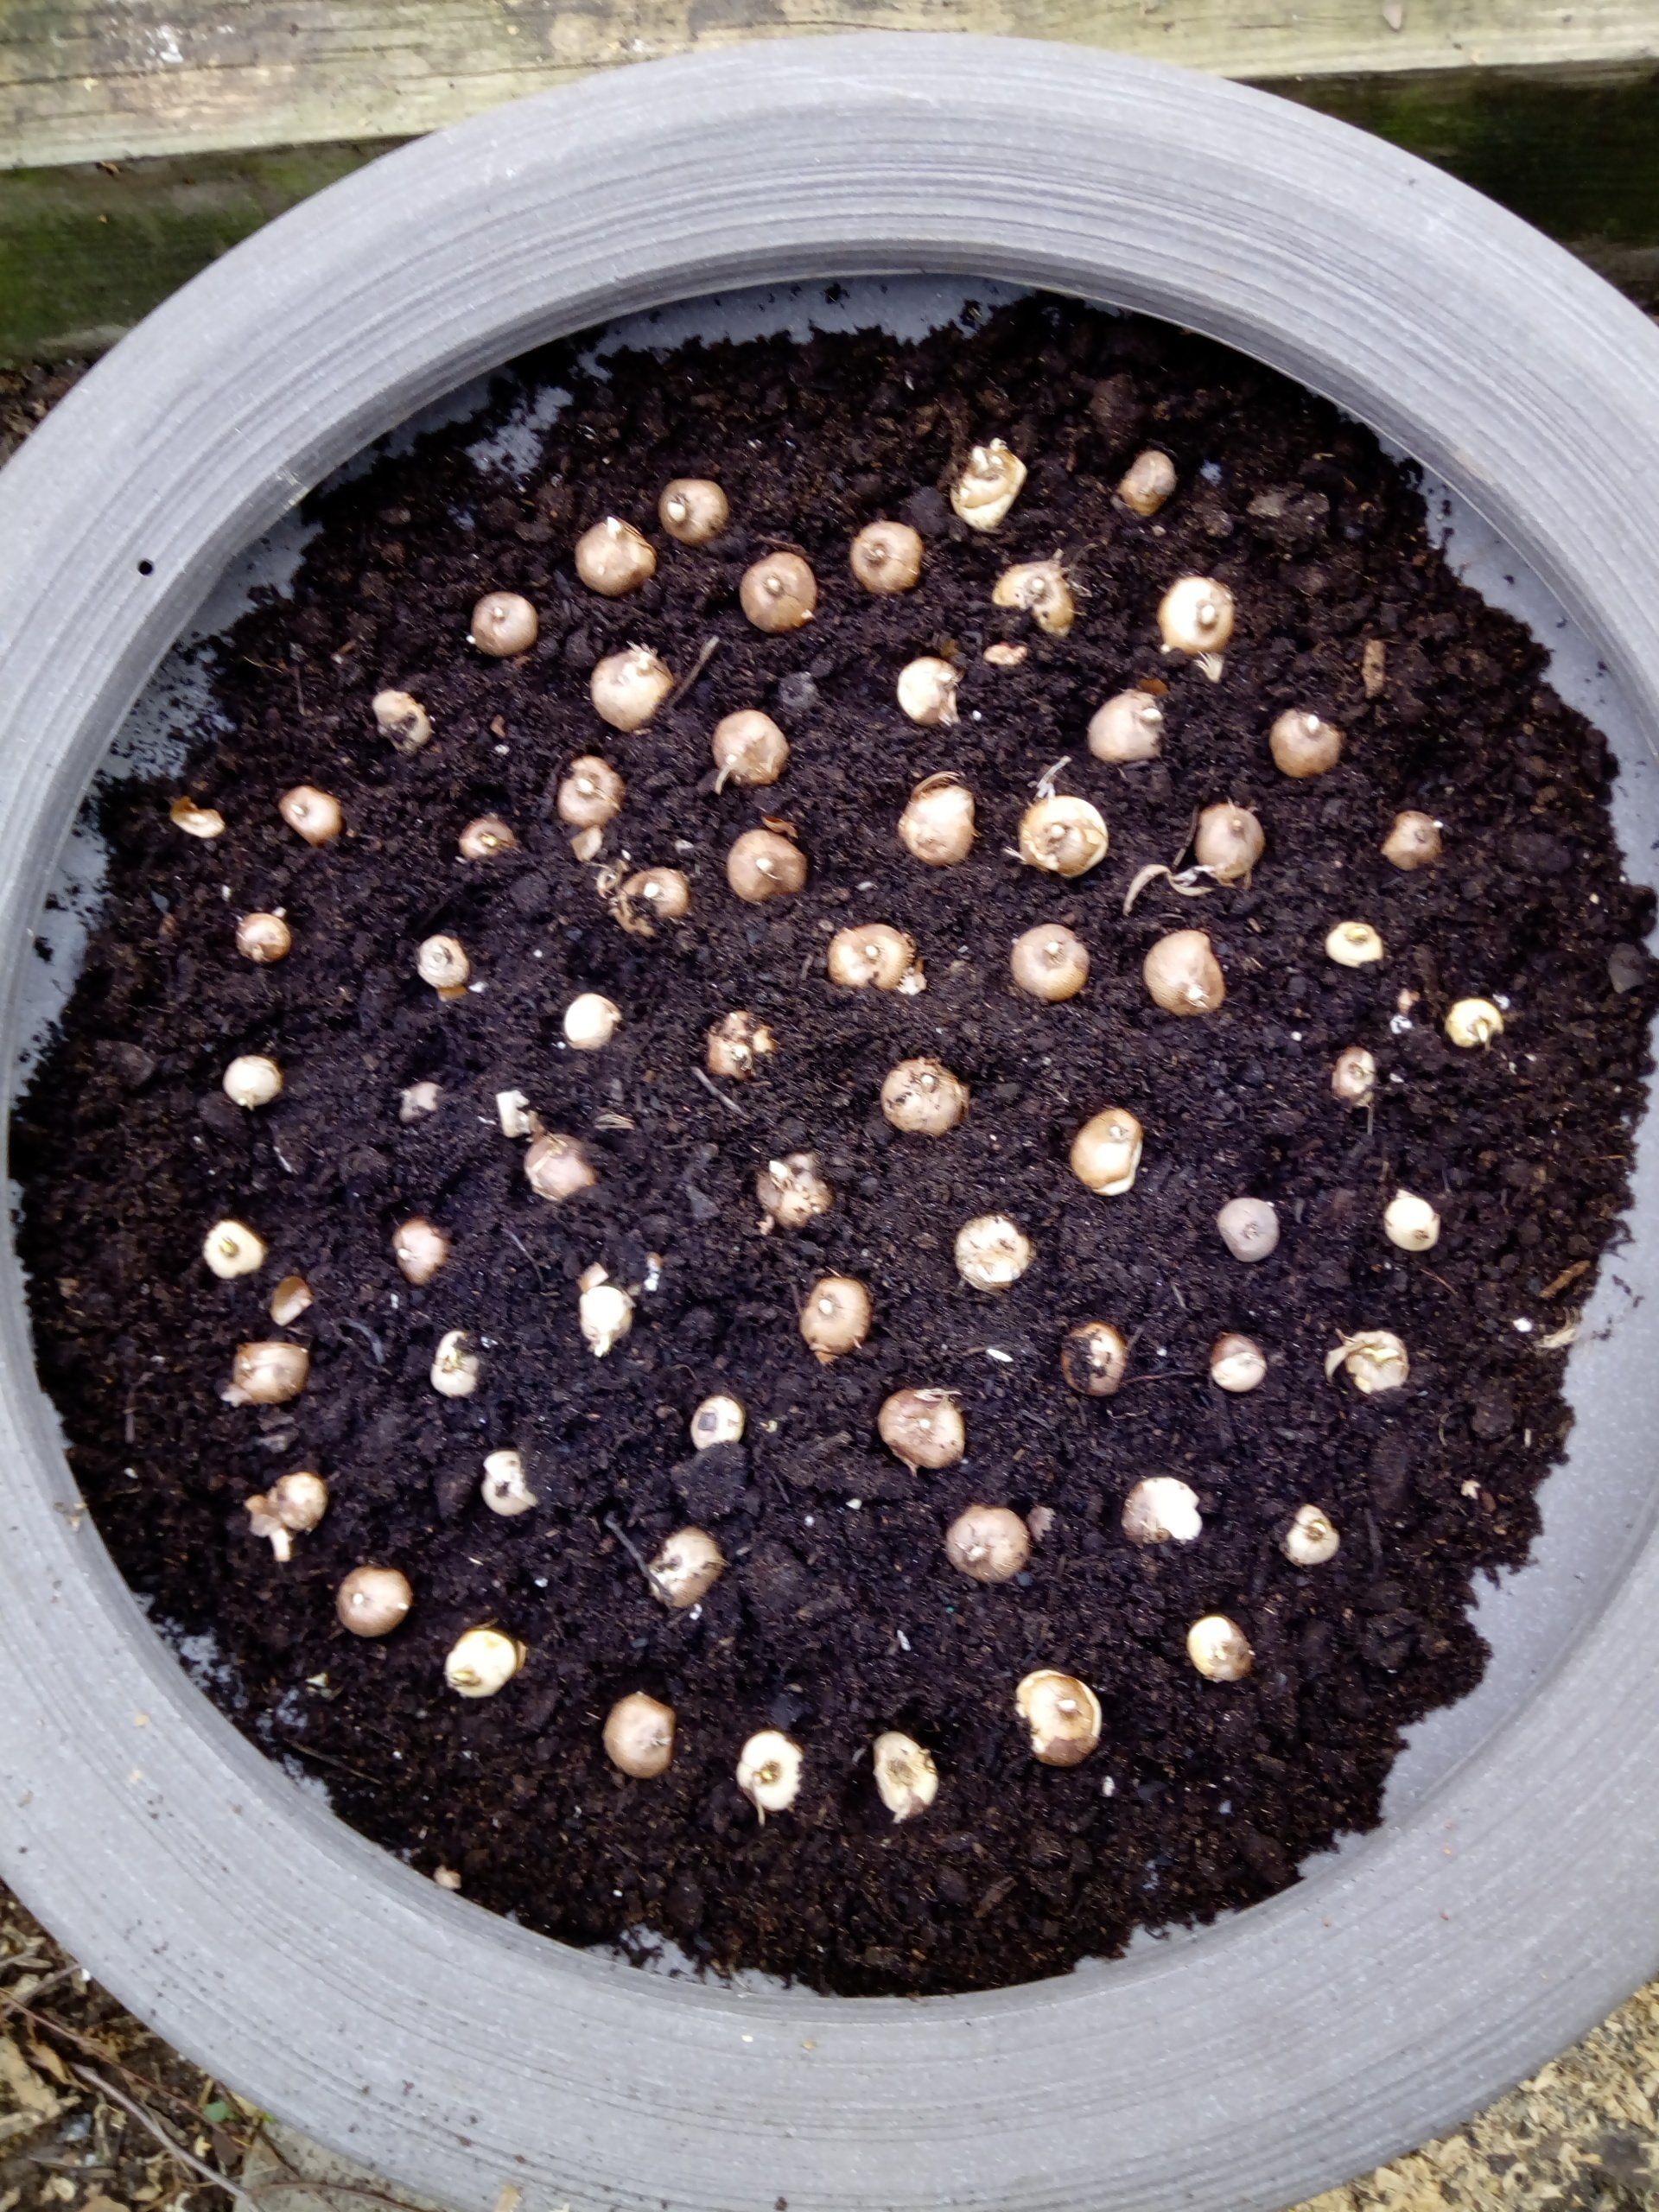 Crocus Corms  (Bulbs) Planted in a Bulb Bowl